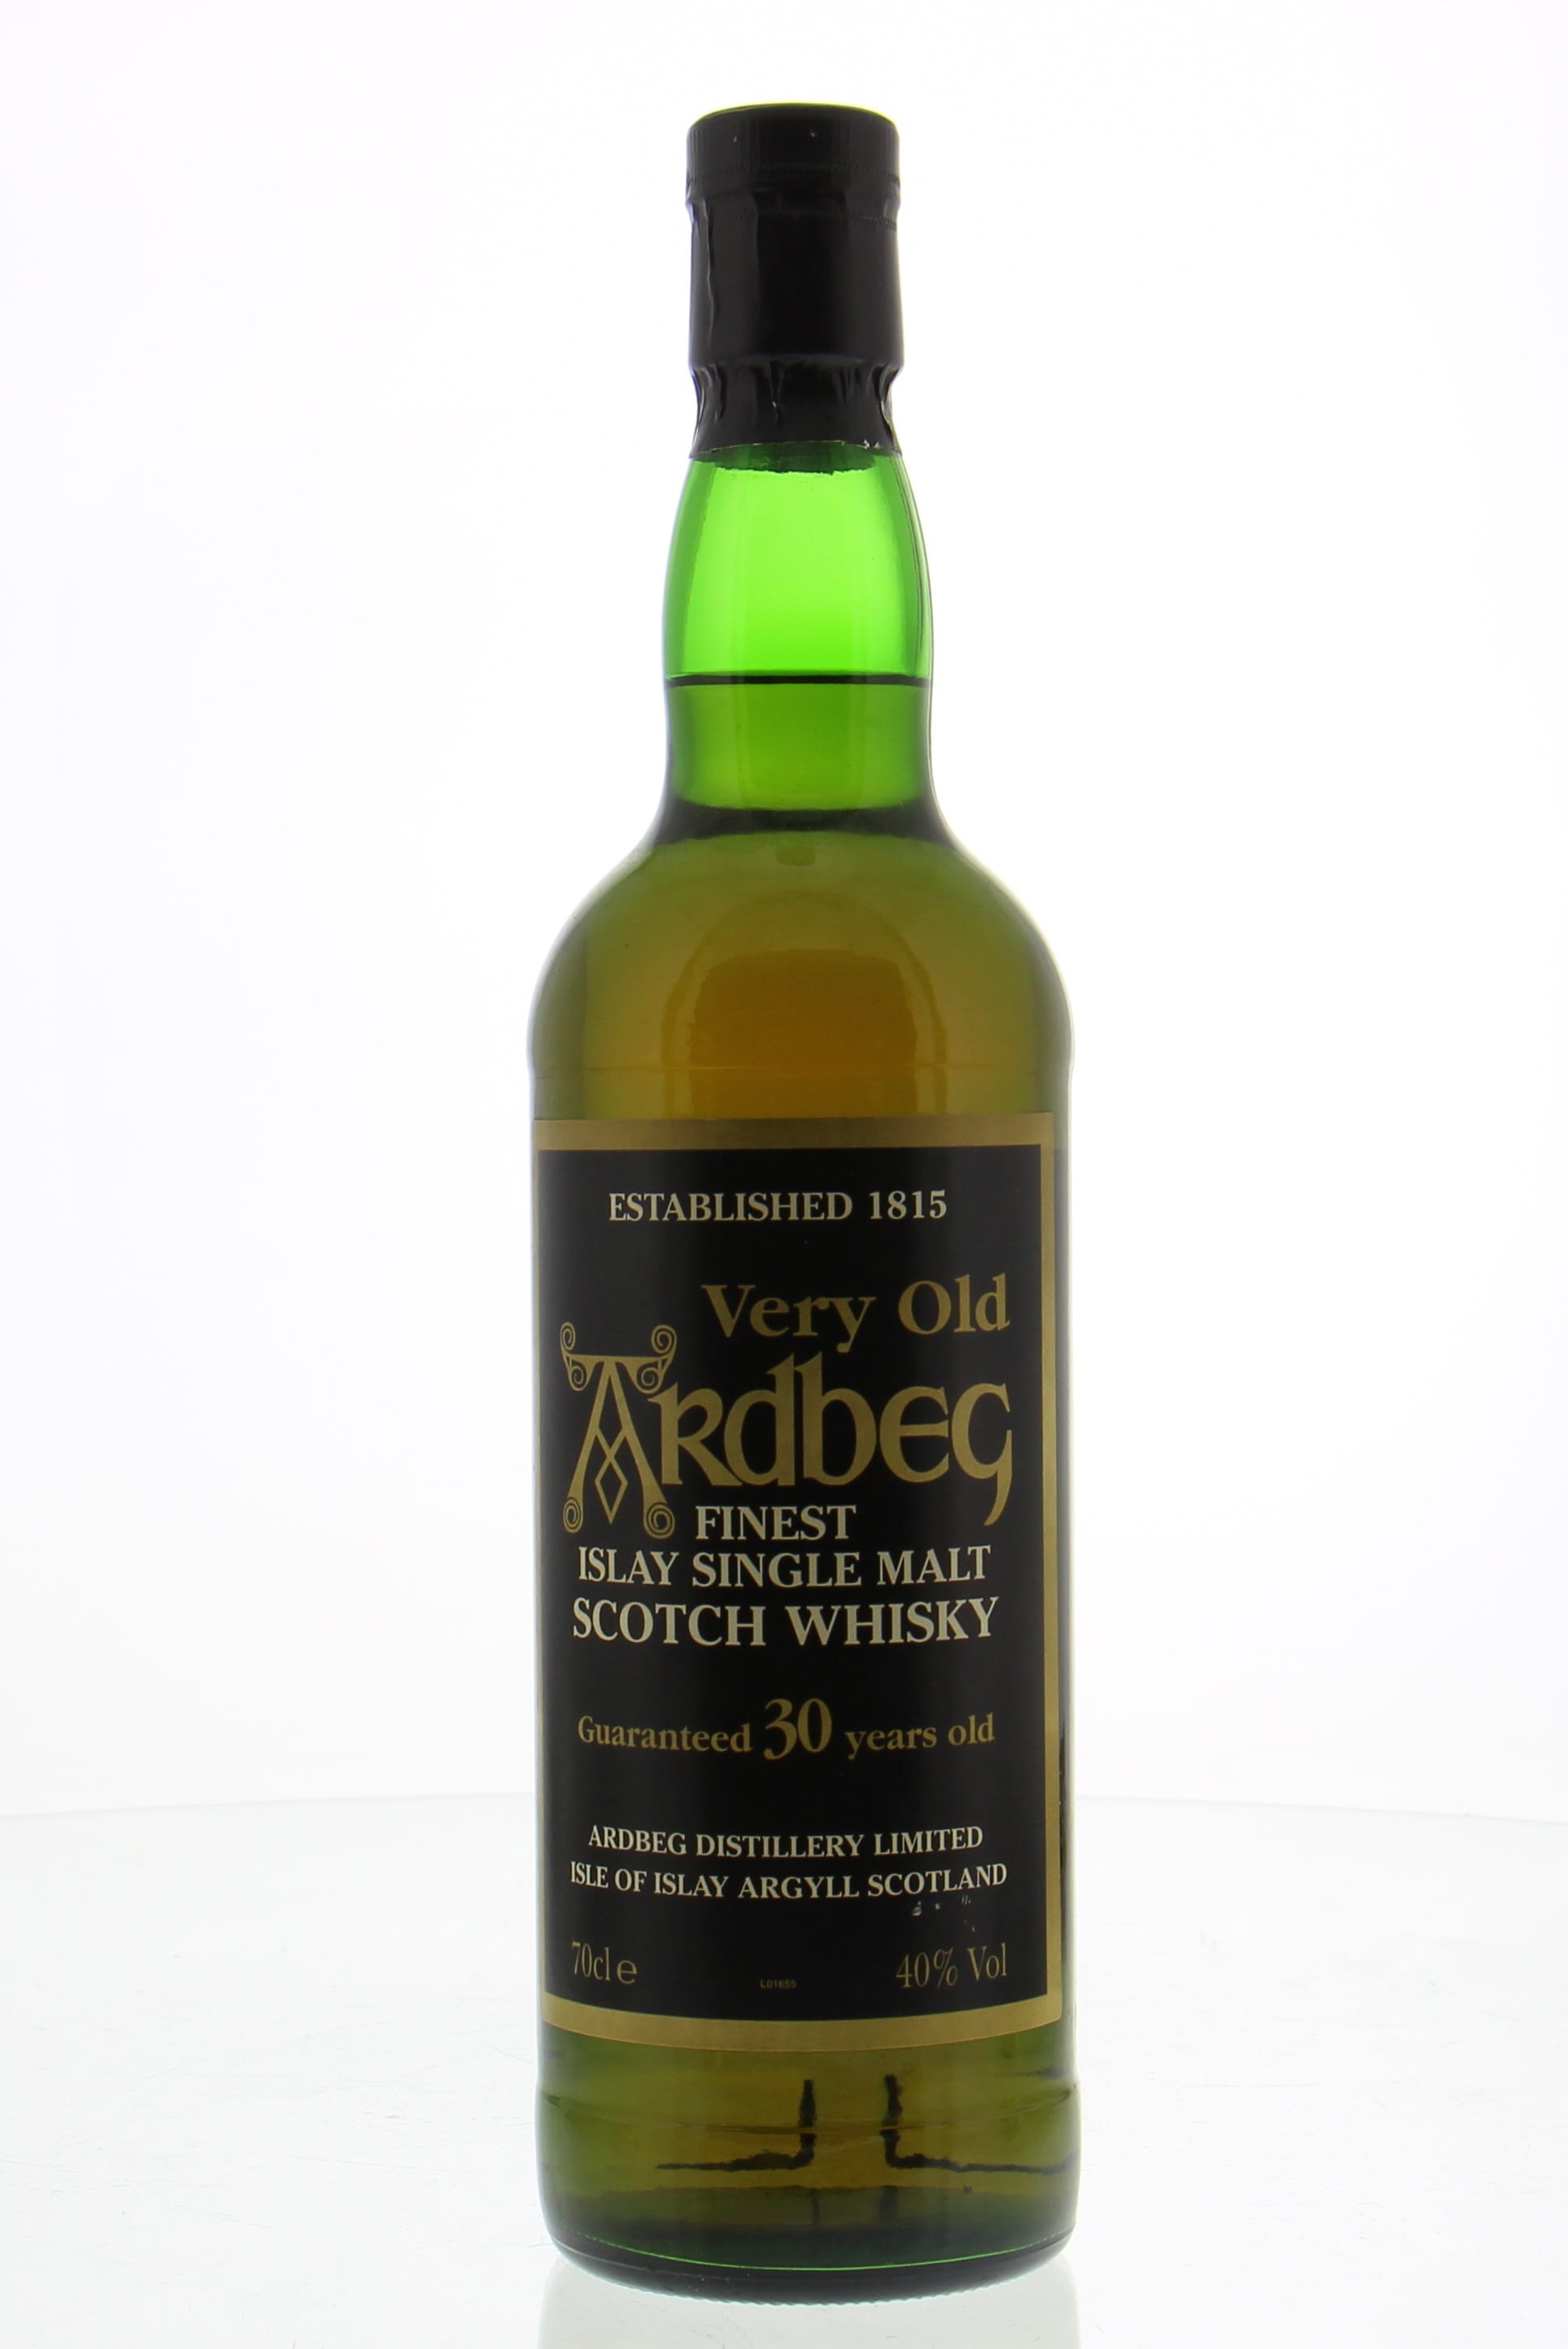 Ardbeg - 30 Years old Very Old Ardbeg 40% NV